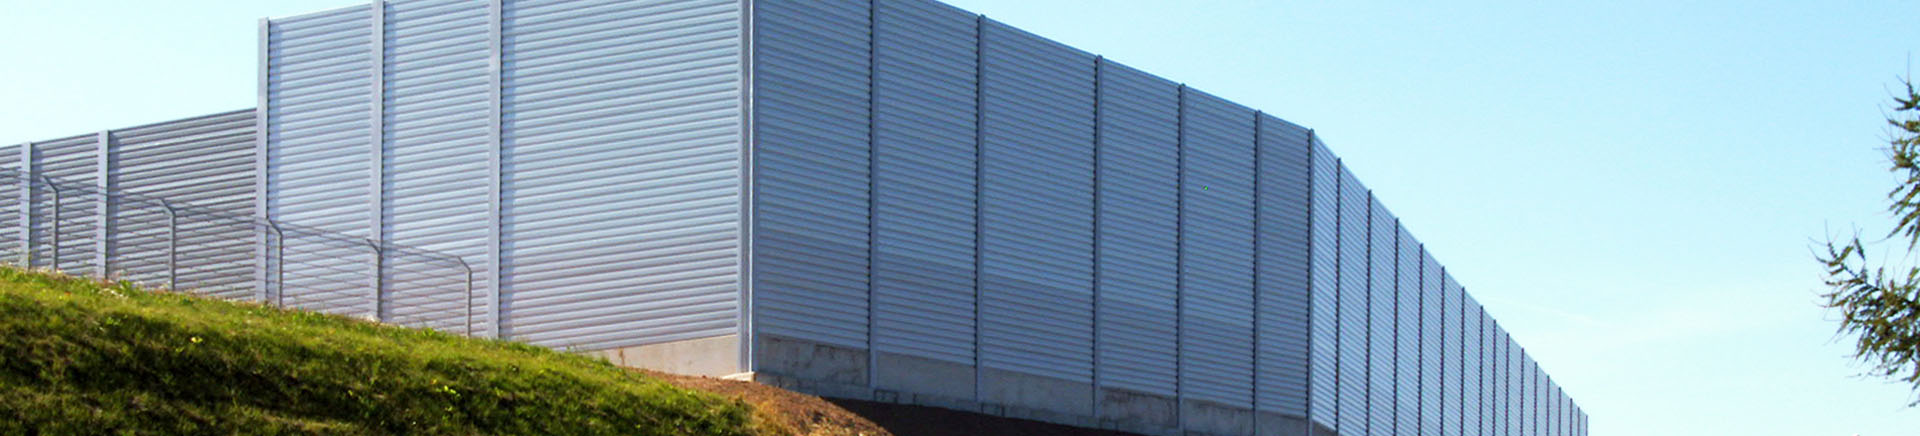 Noise protection cladding - Noise protection wall inside & outside - Schütte Aluminium